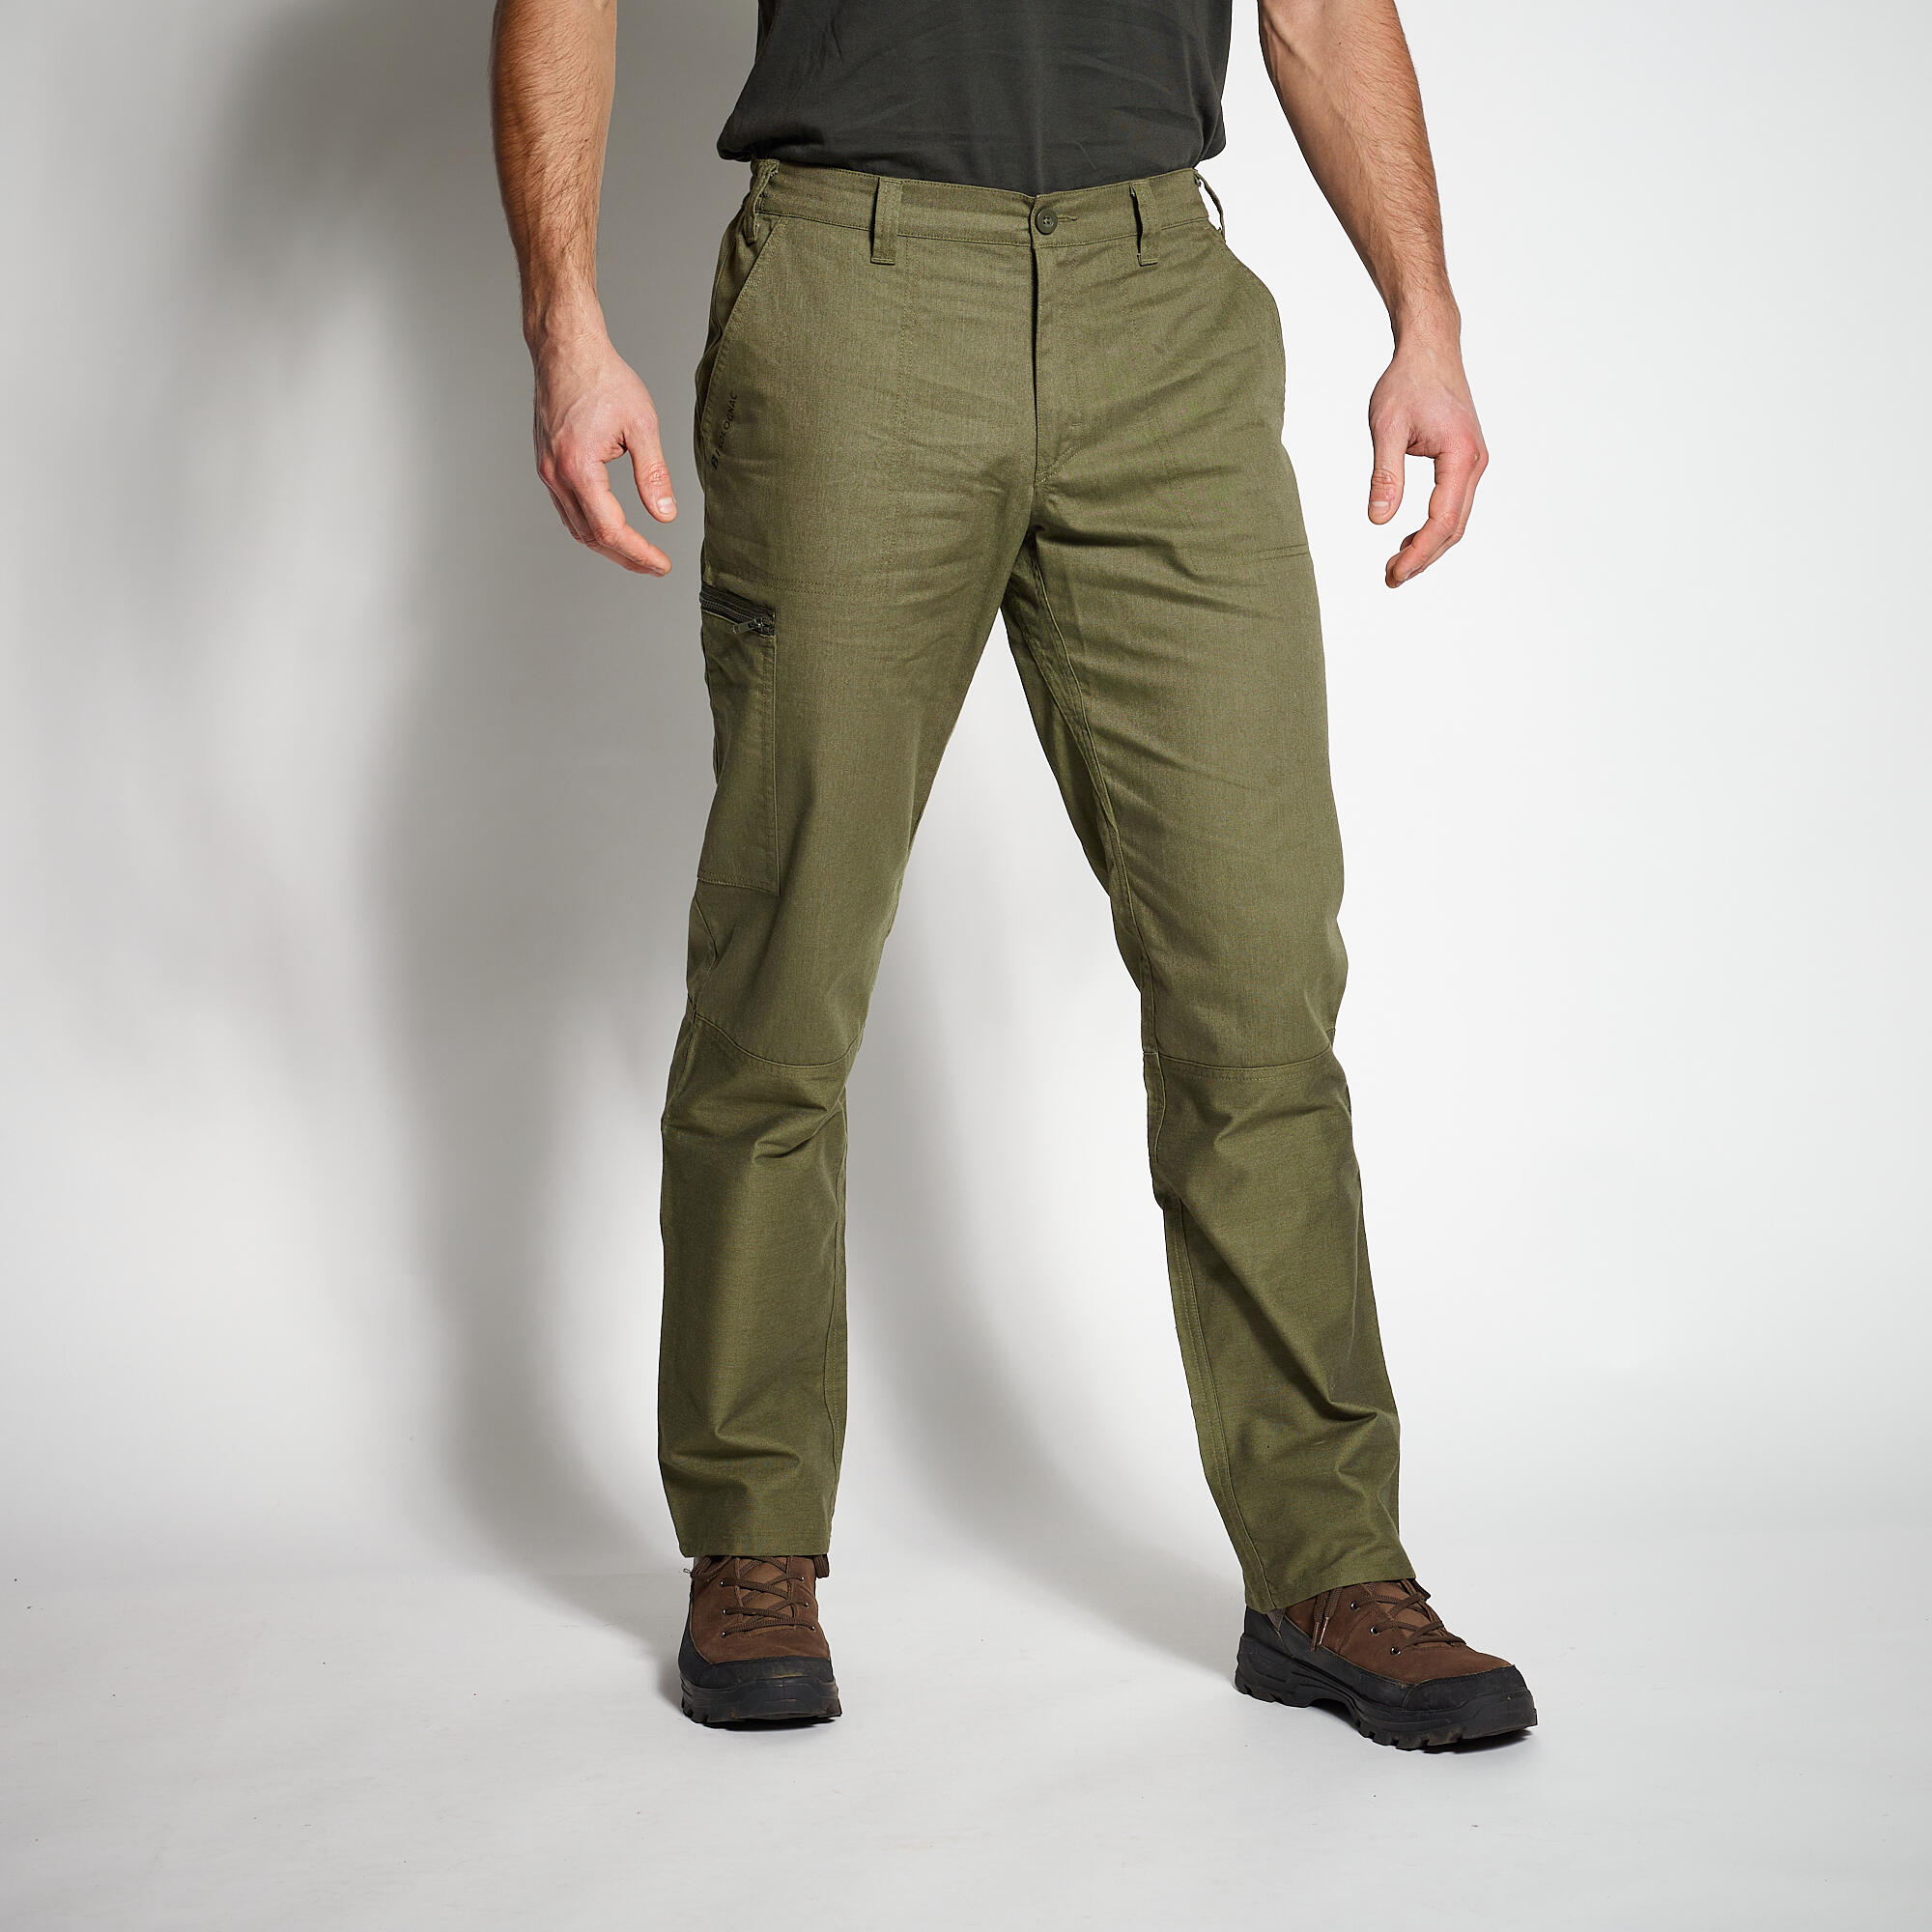 Asics Windblock Tight - Running trousers Men's | Buy online | Bergfreunde.eu